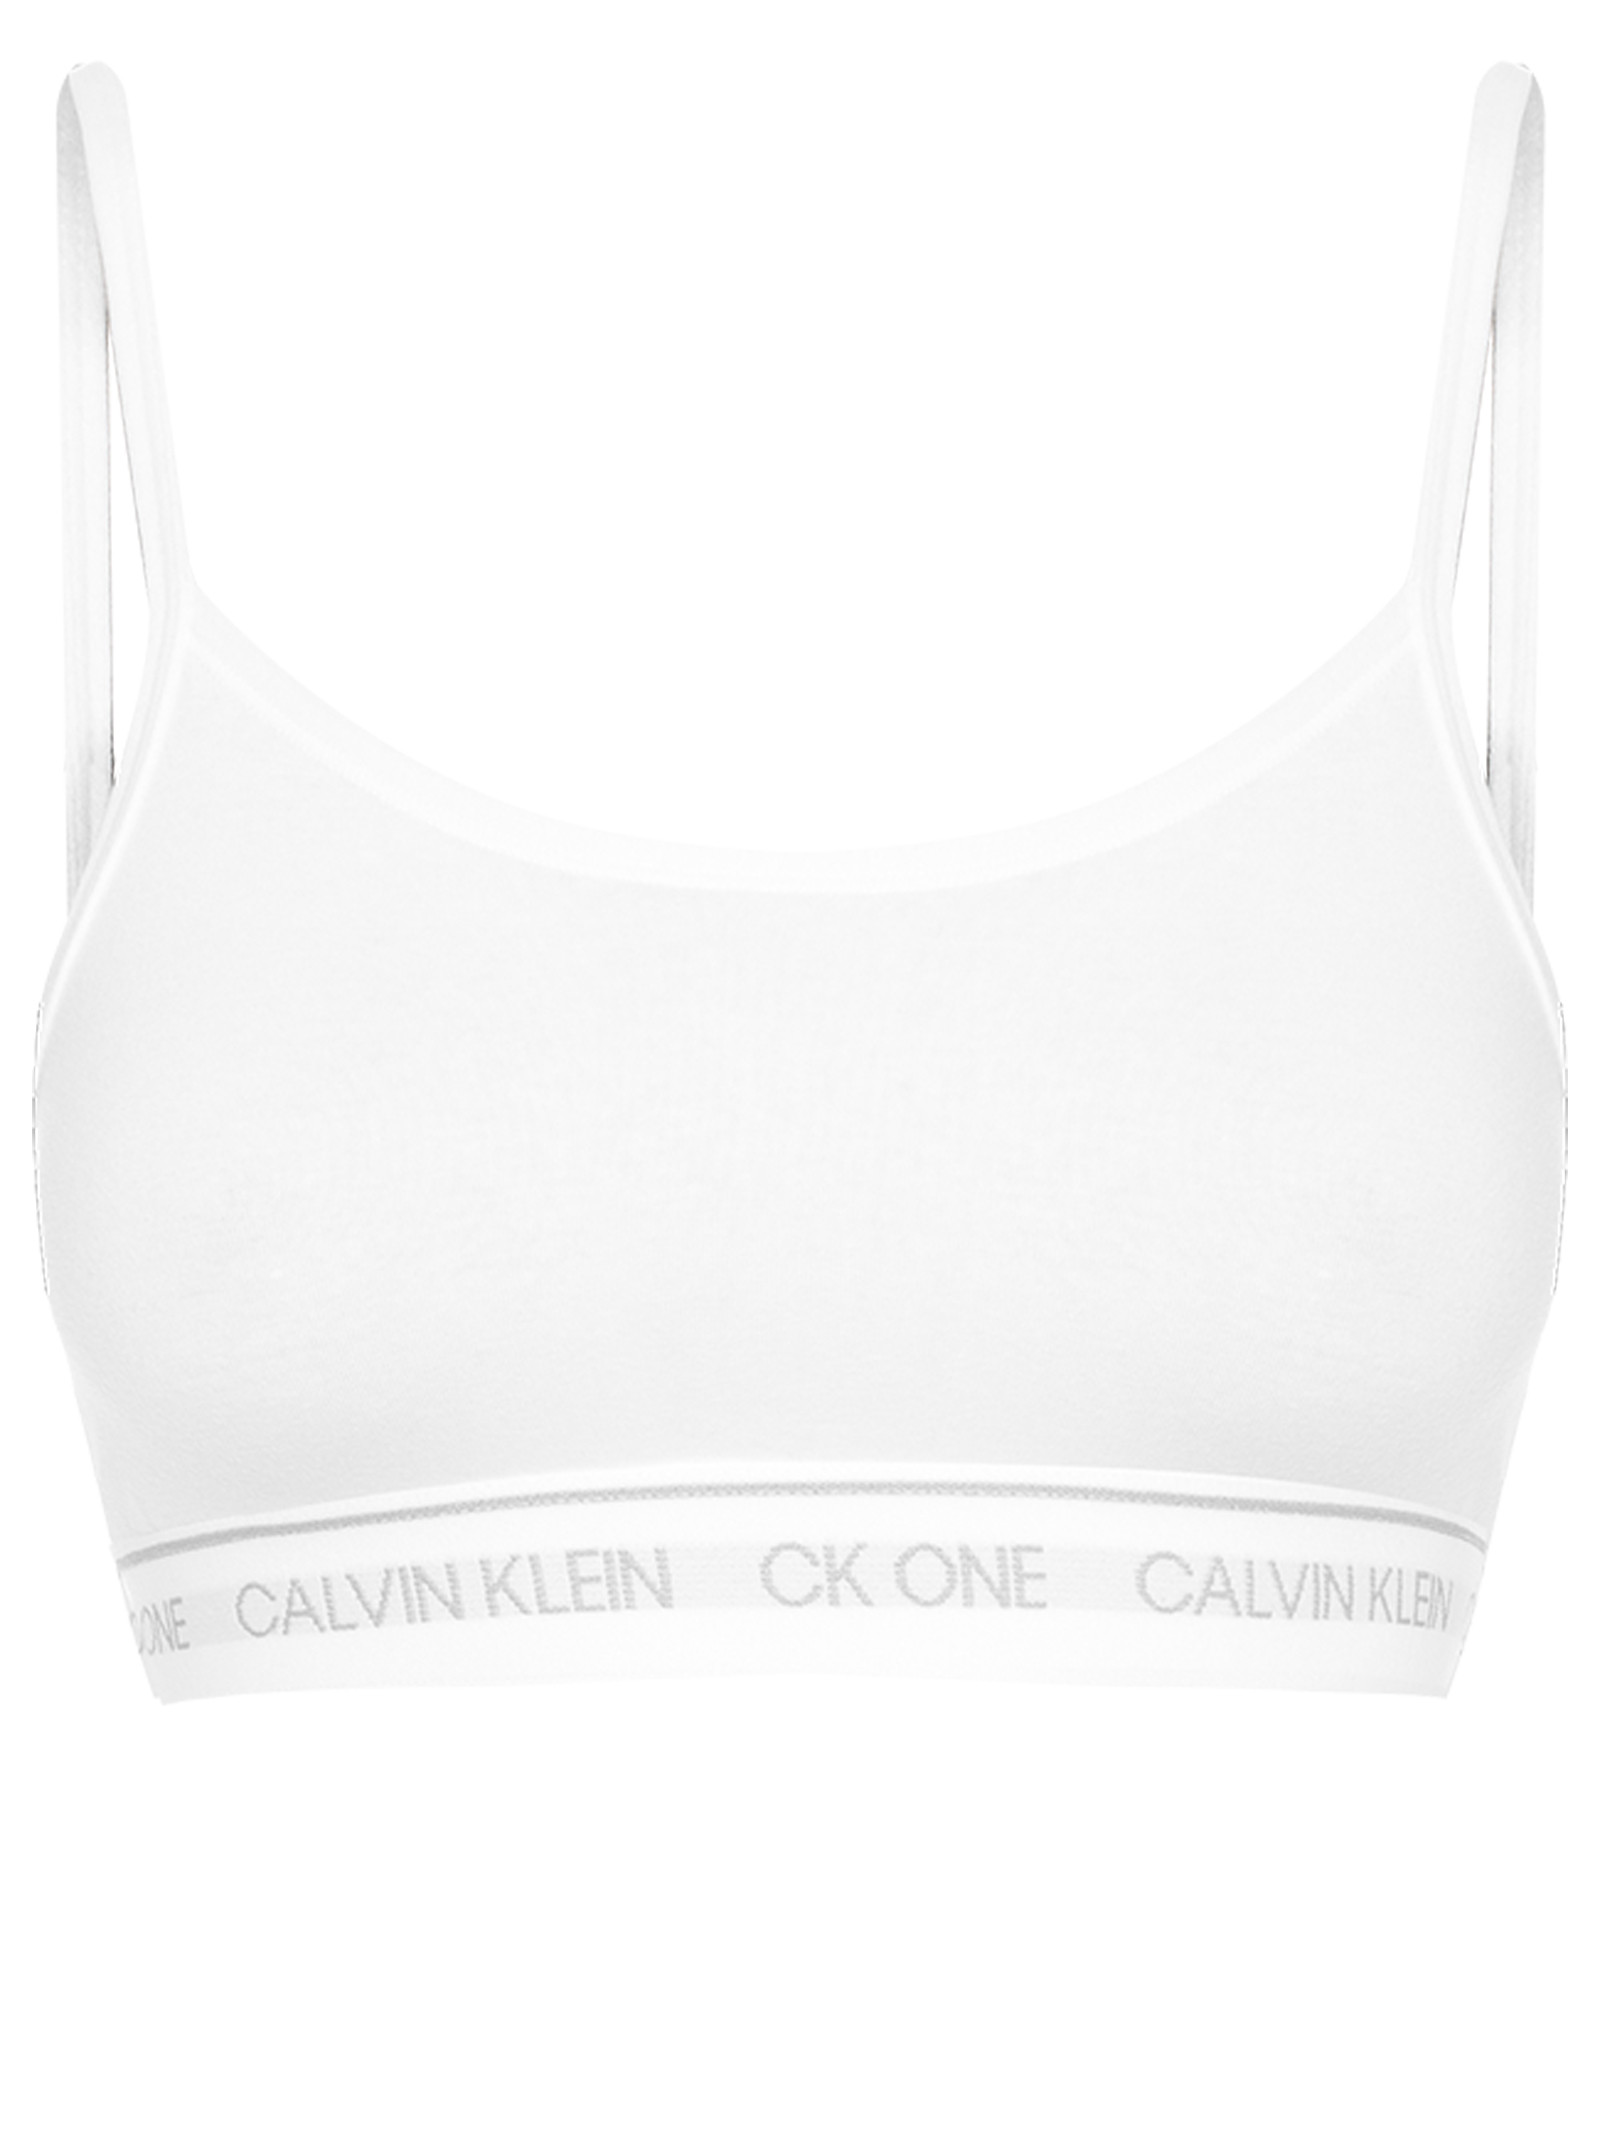 Calvin Klein Underwear Soutien Bustier Soutien em Branco, Offwhite